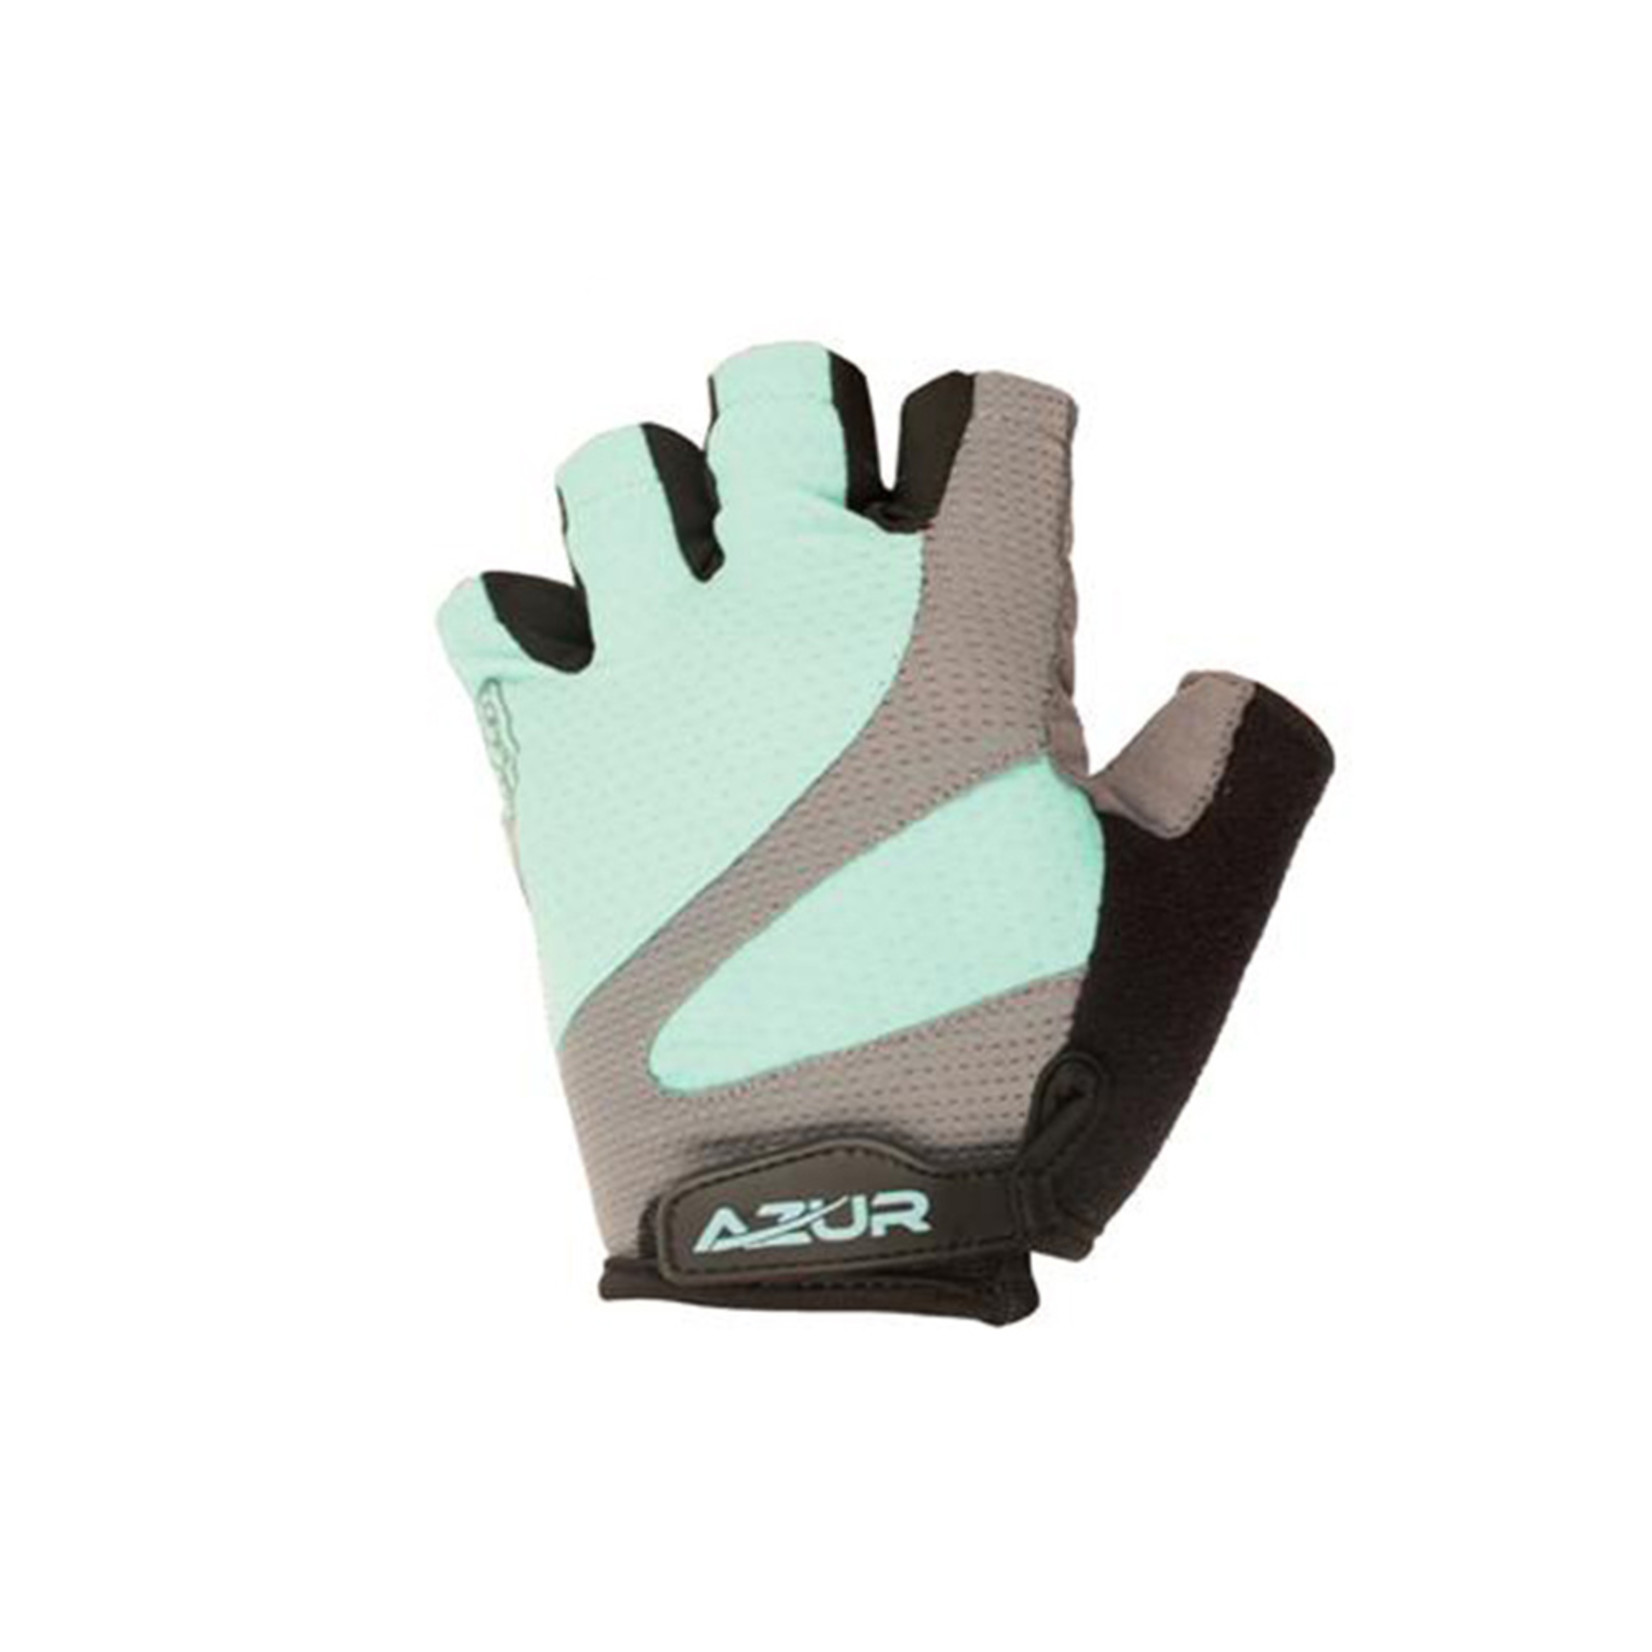 Azur Azur Bike/Cycling Glove - Synthetic Palm - S60 Series - Mint - XX Small